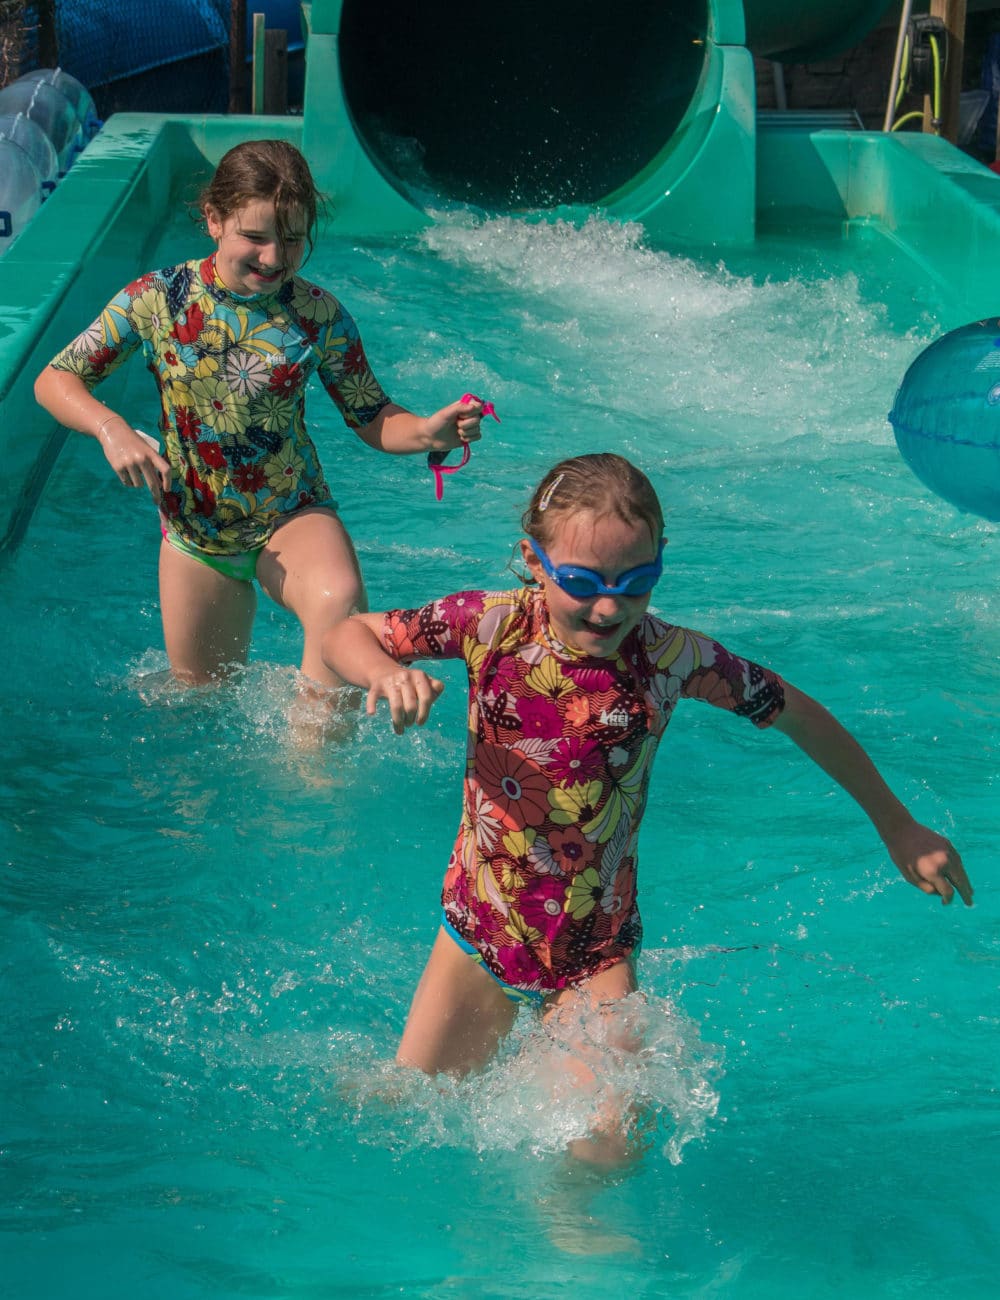 Water fun at Glenwood Springs hot pools